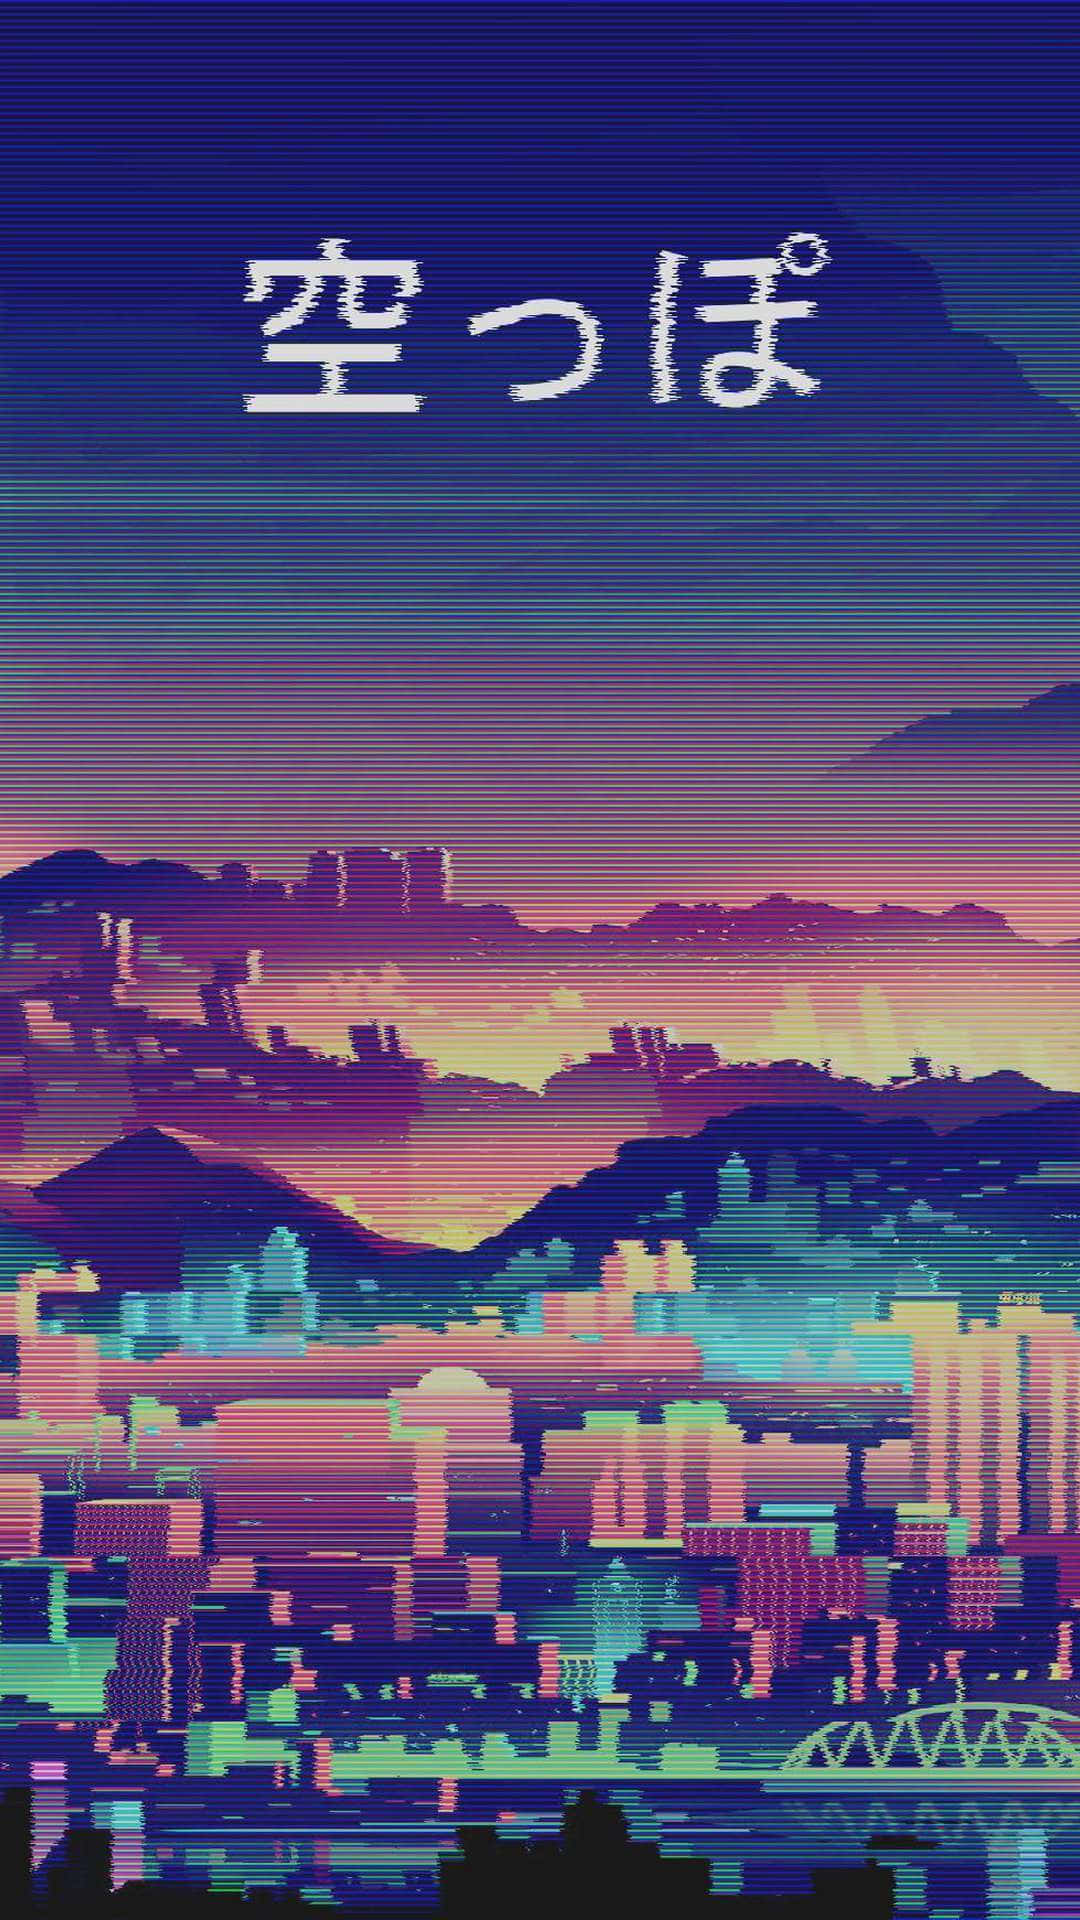 Gamla Anime Pixelated Metropolis Wallpaper